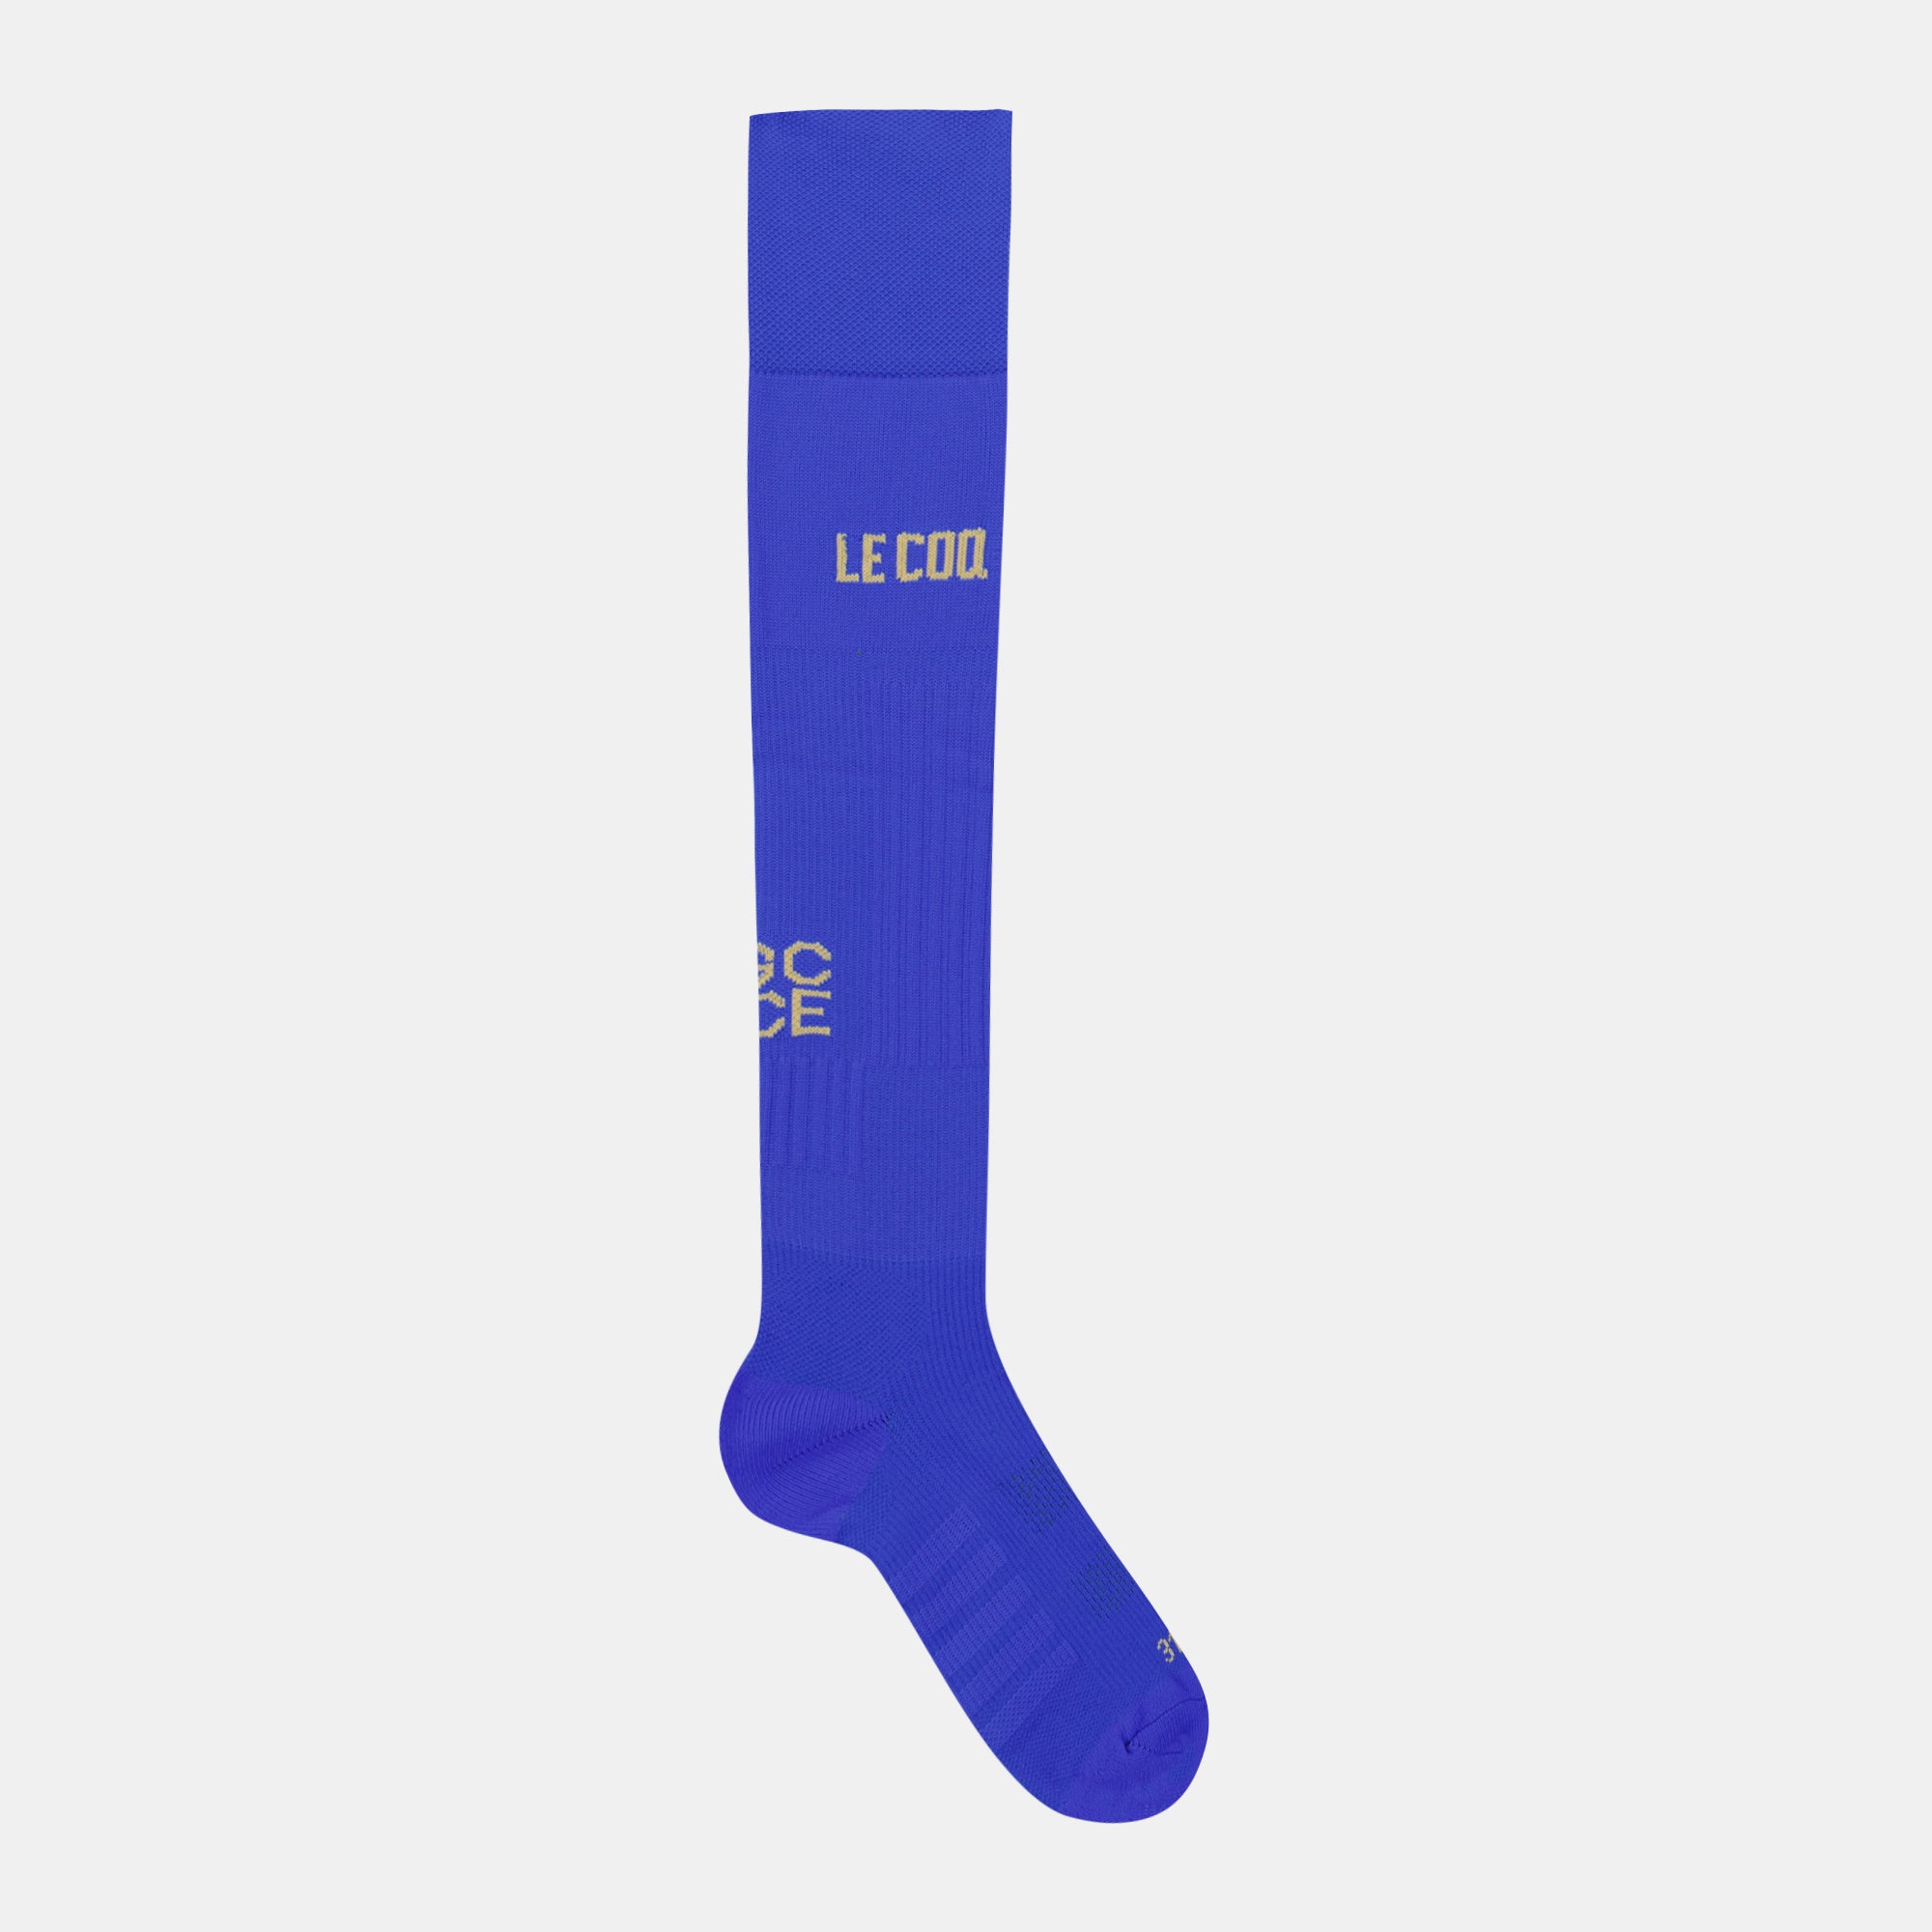 2320941-OGC NICE Replica Socks 23 Enfant Nblue  | Calcetines de sport para Niño